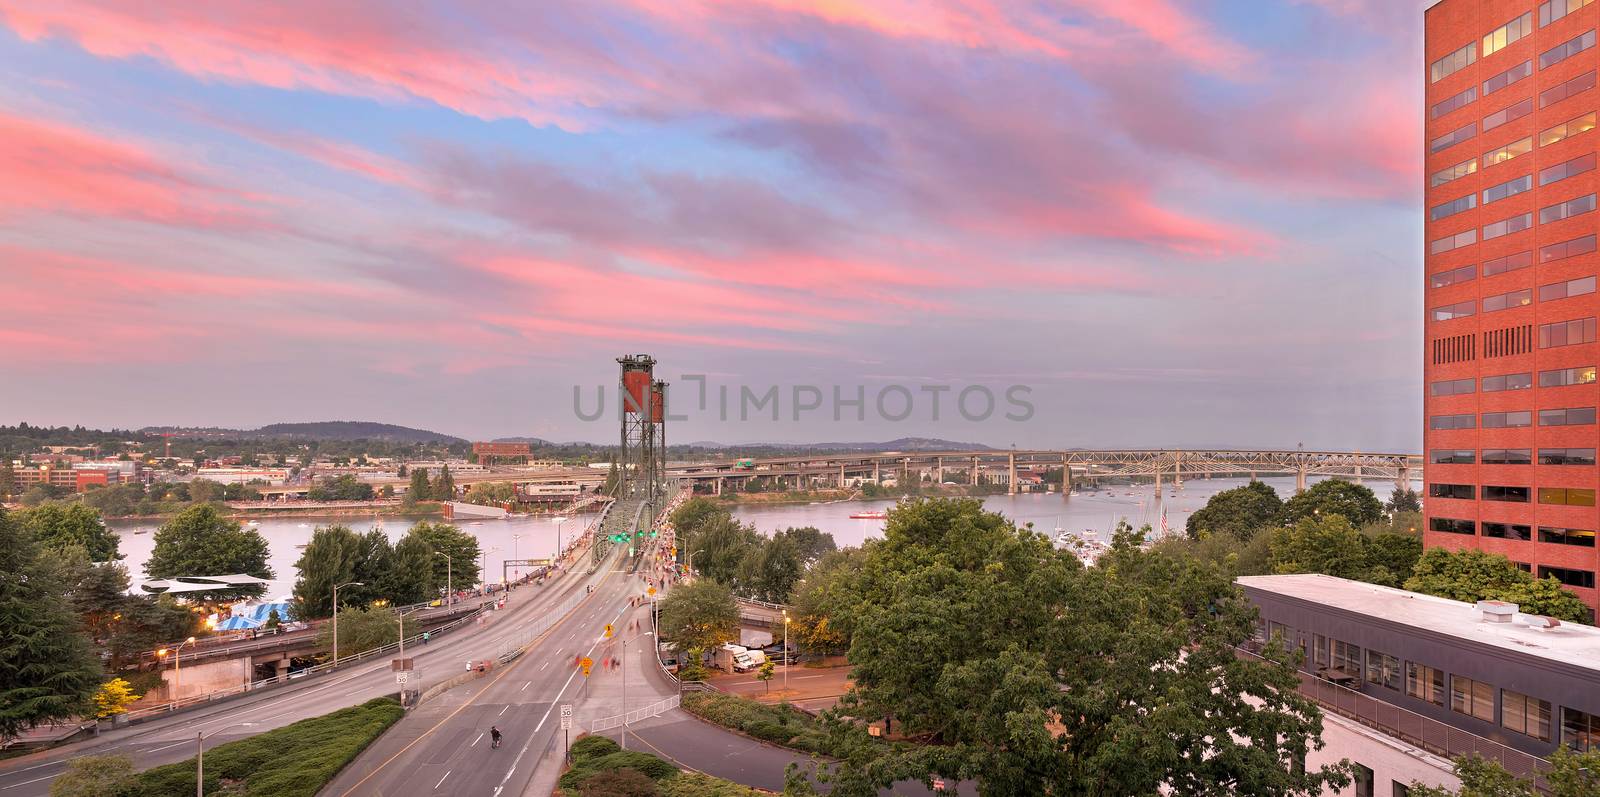 Portland Waterfront Hawthorne Bridge at Sunset by jpldesigns